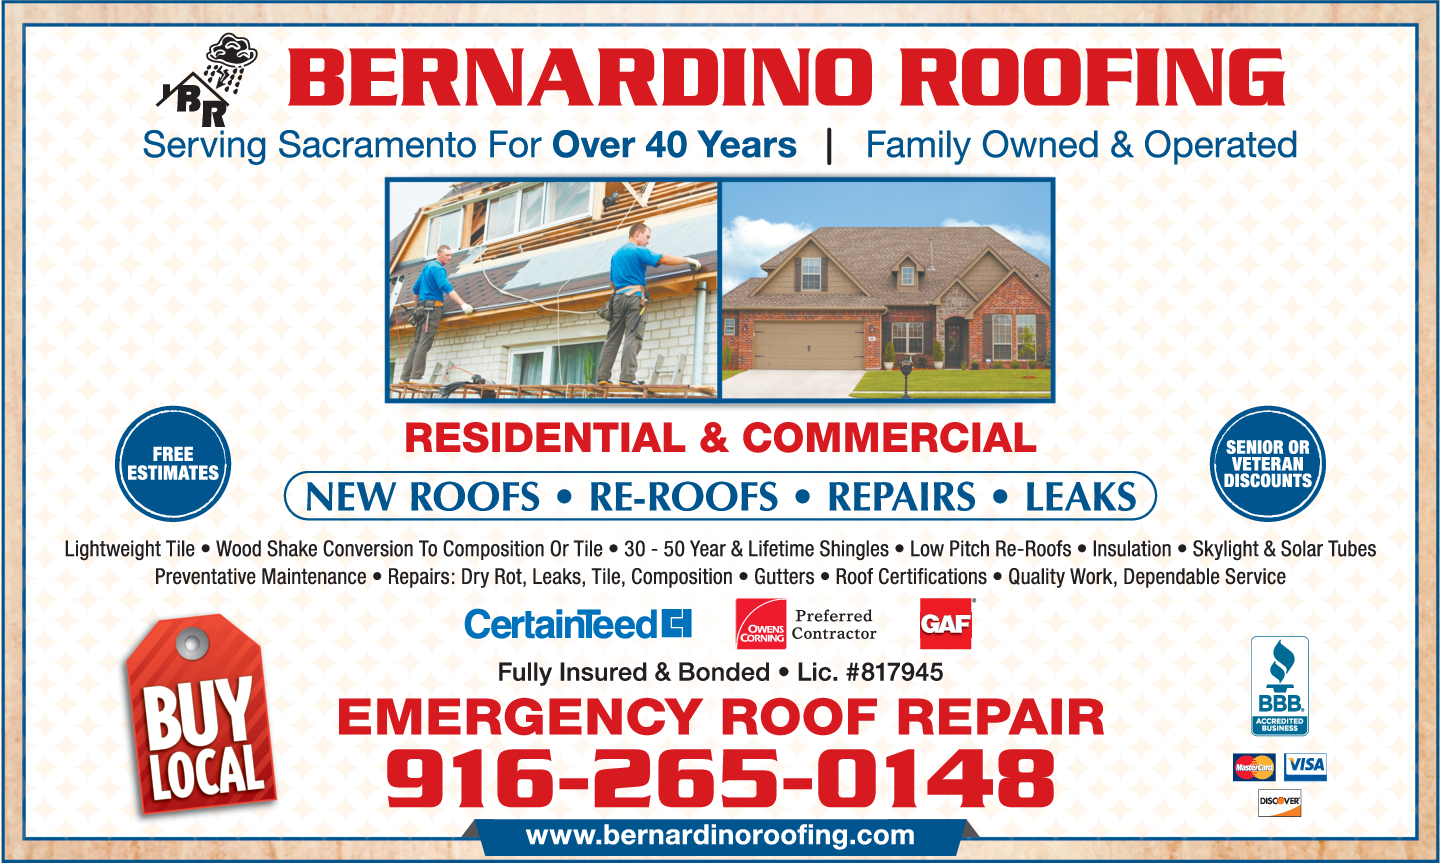 Bernardino Roofing